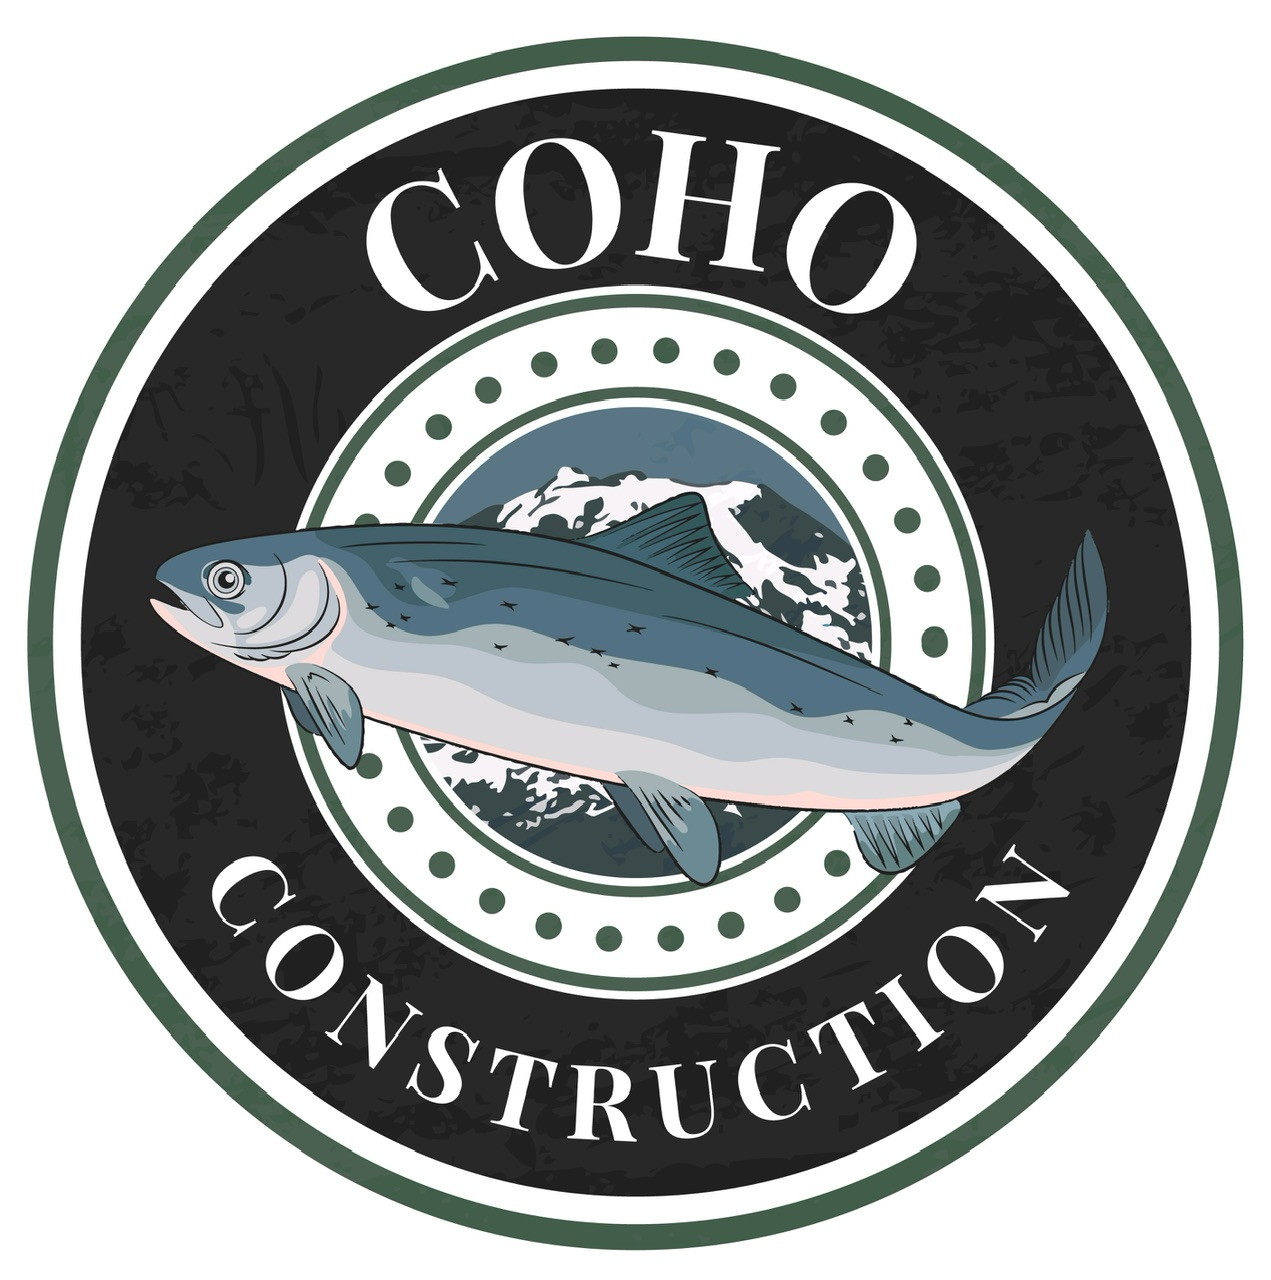 COHO Construction Logo